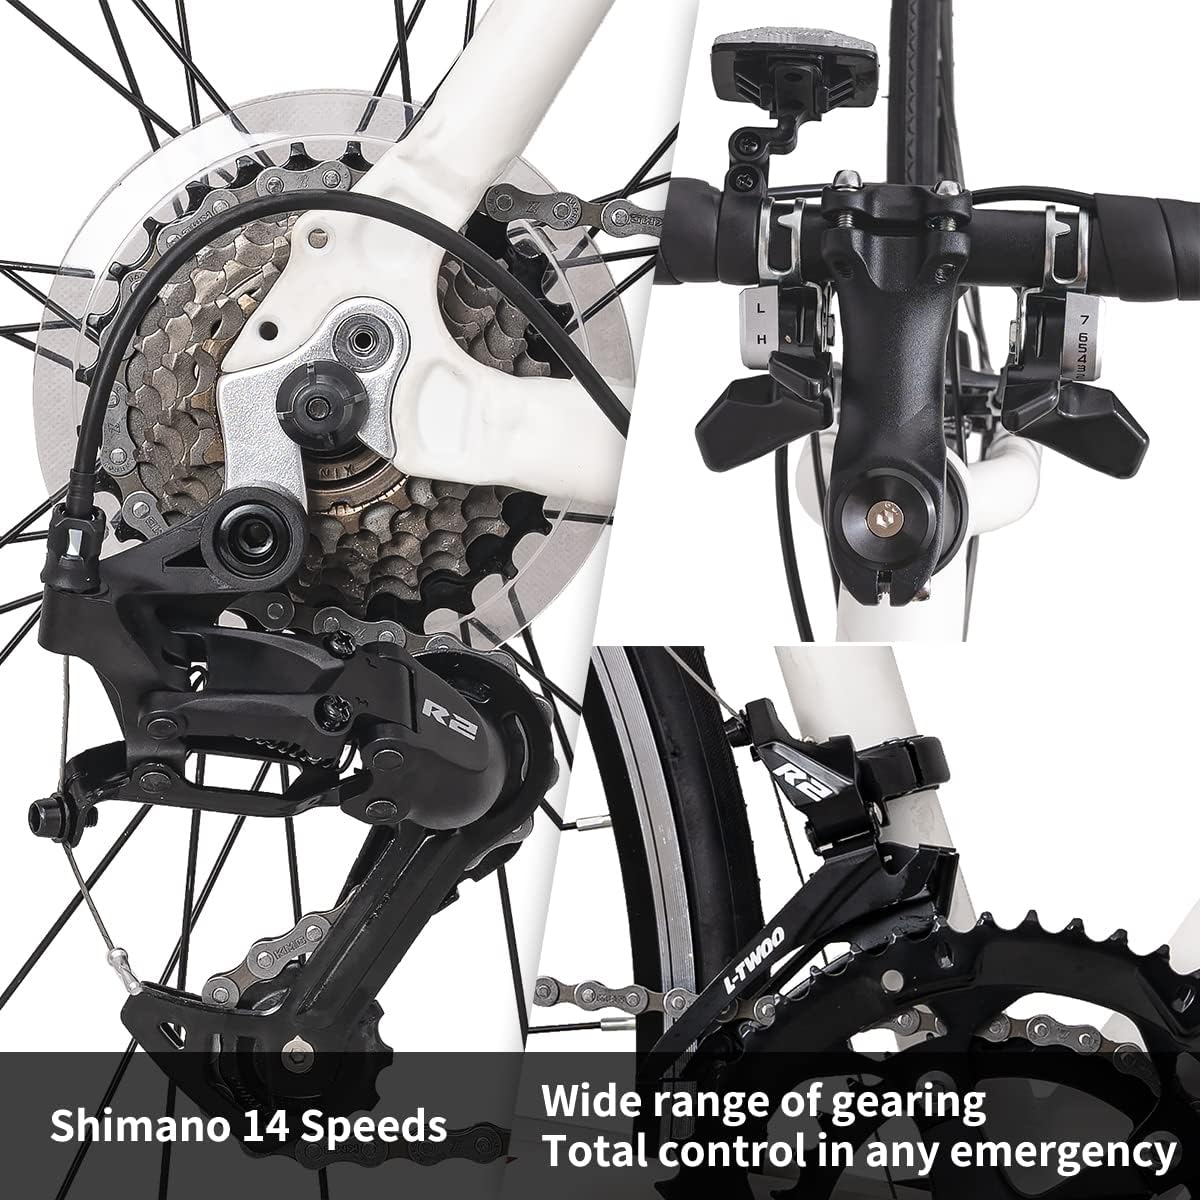 Hiland Road Bike,Shimano 14 Speeds,Light Weight Aluminum Frame,700C Racing Bike for Men - image 4 of 7